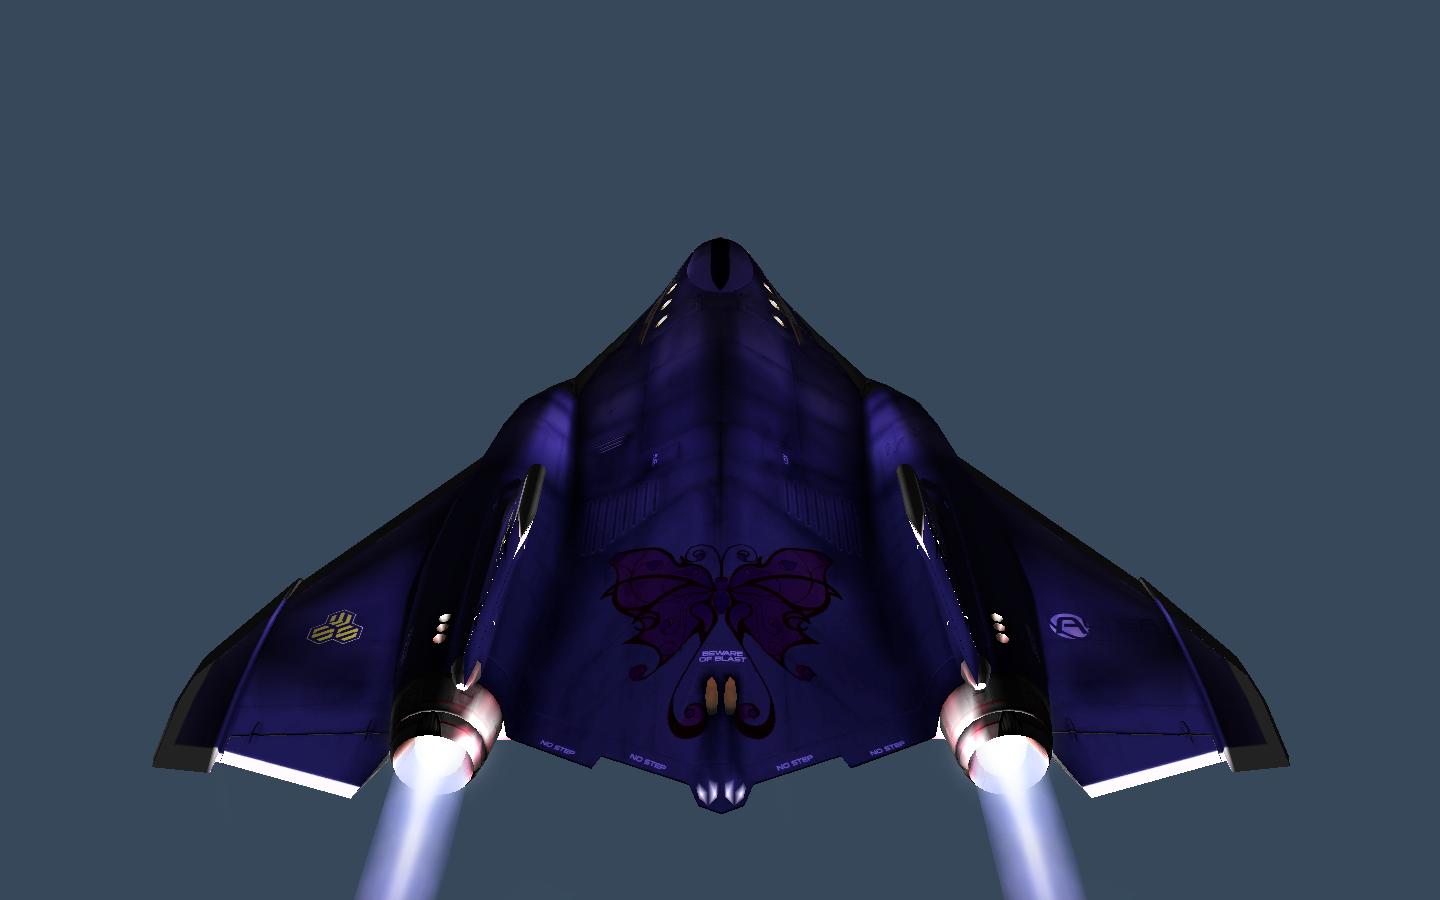 SMS Star Sapphire - XR2 Ravenstar skin pic 1.jpg